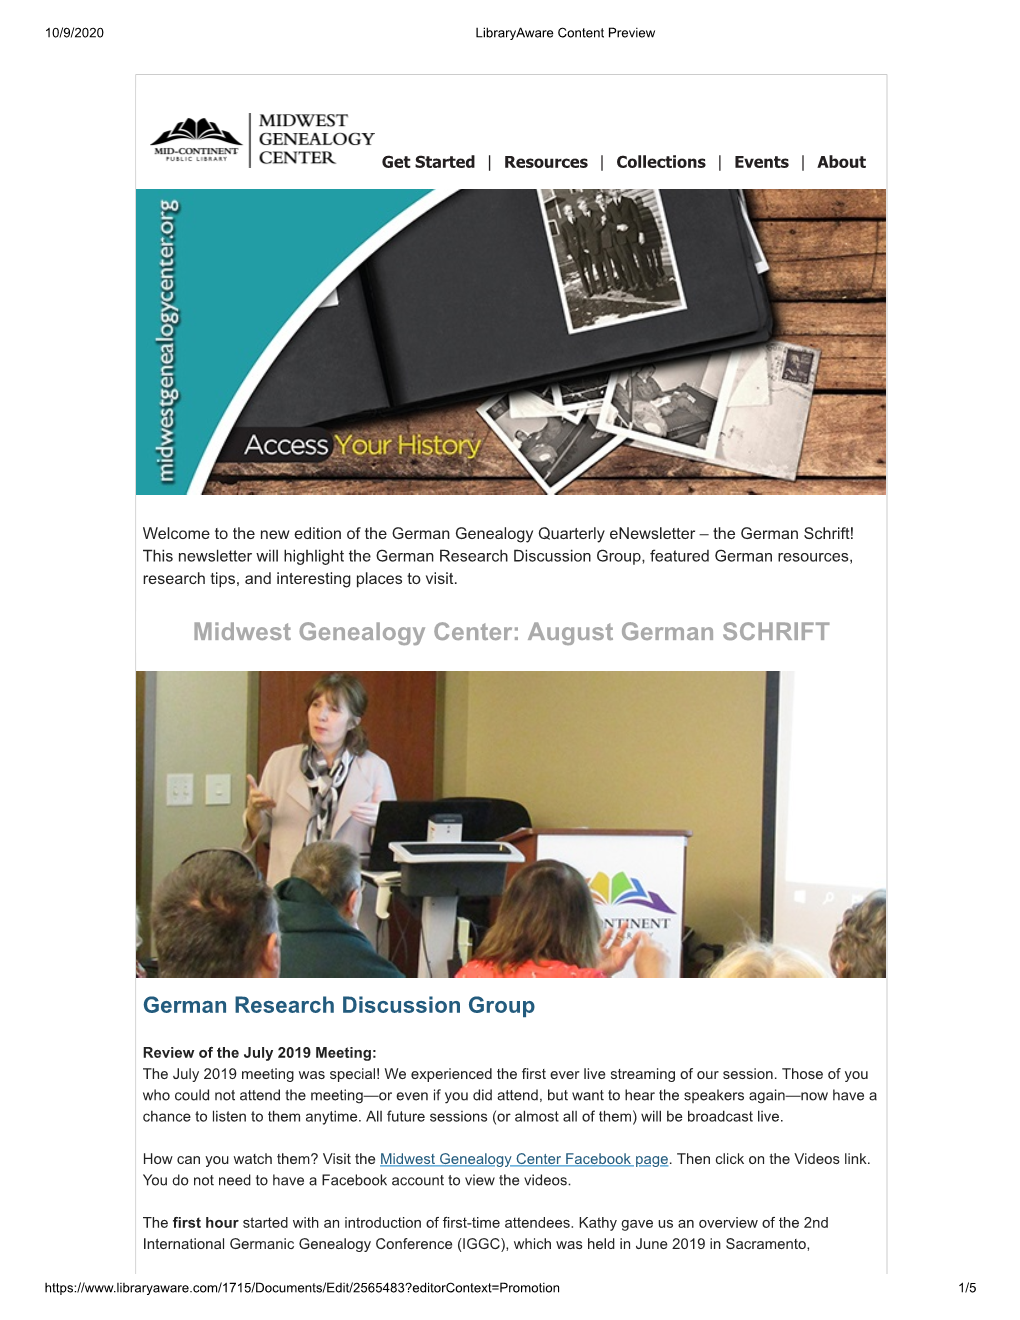 Midwest Genealogy Center: August German SCHRIFT